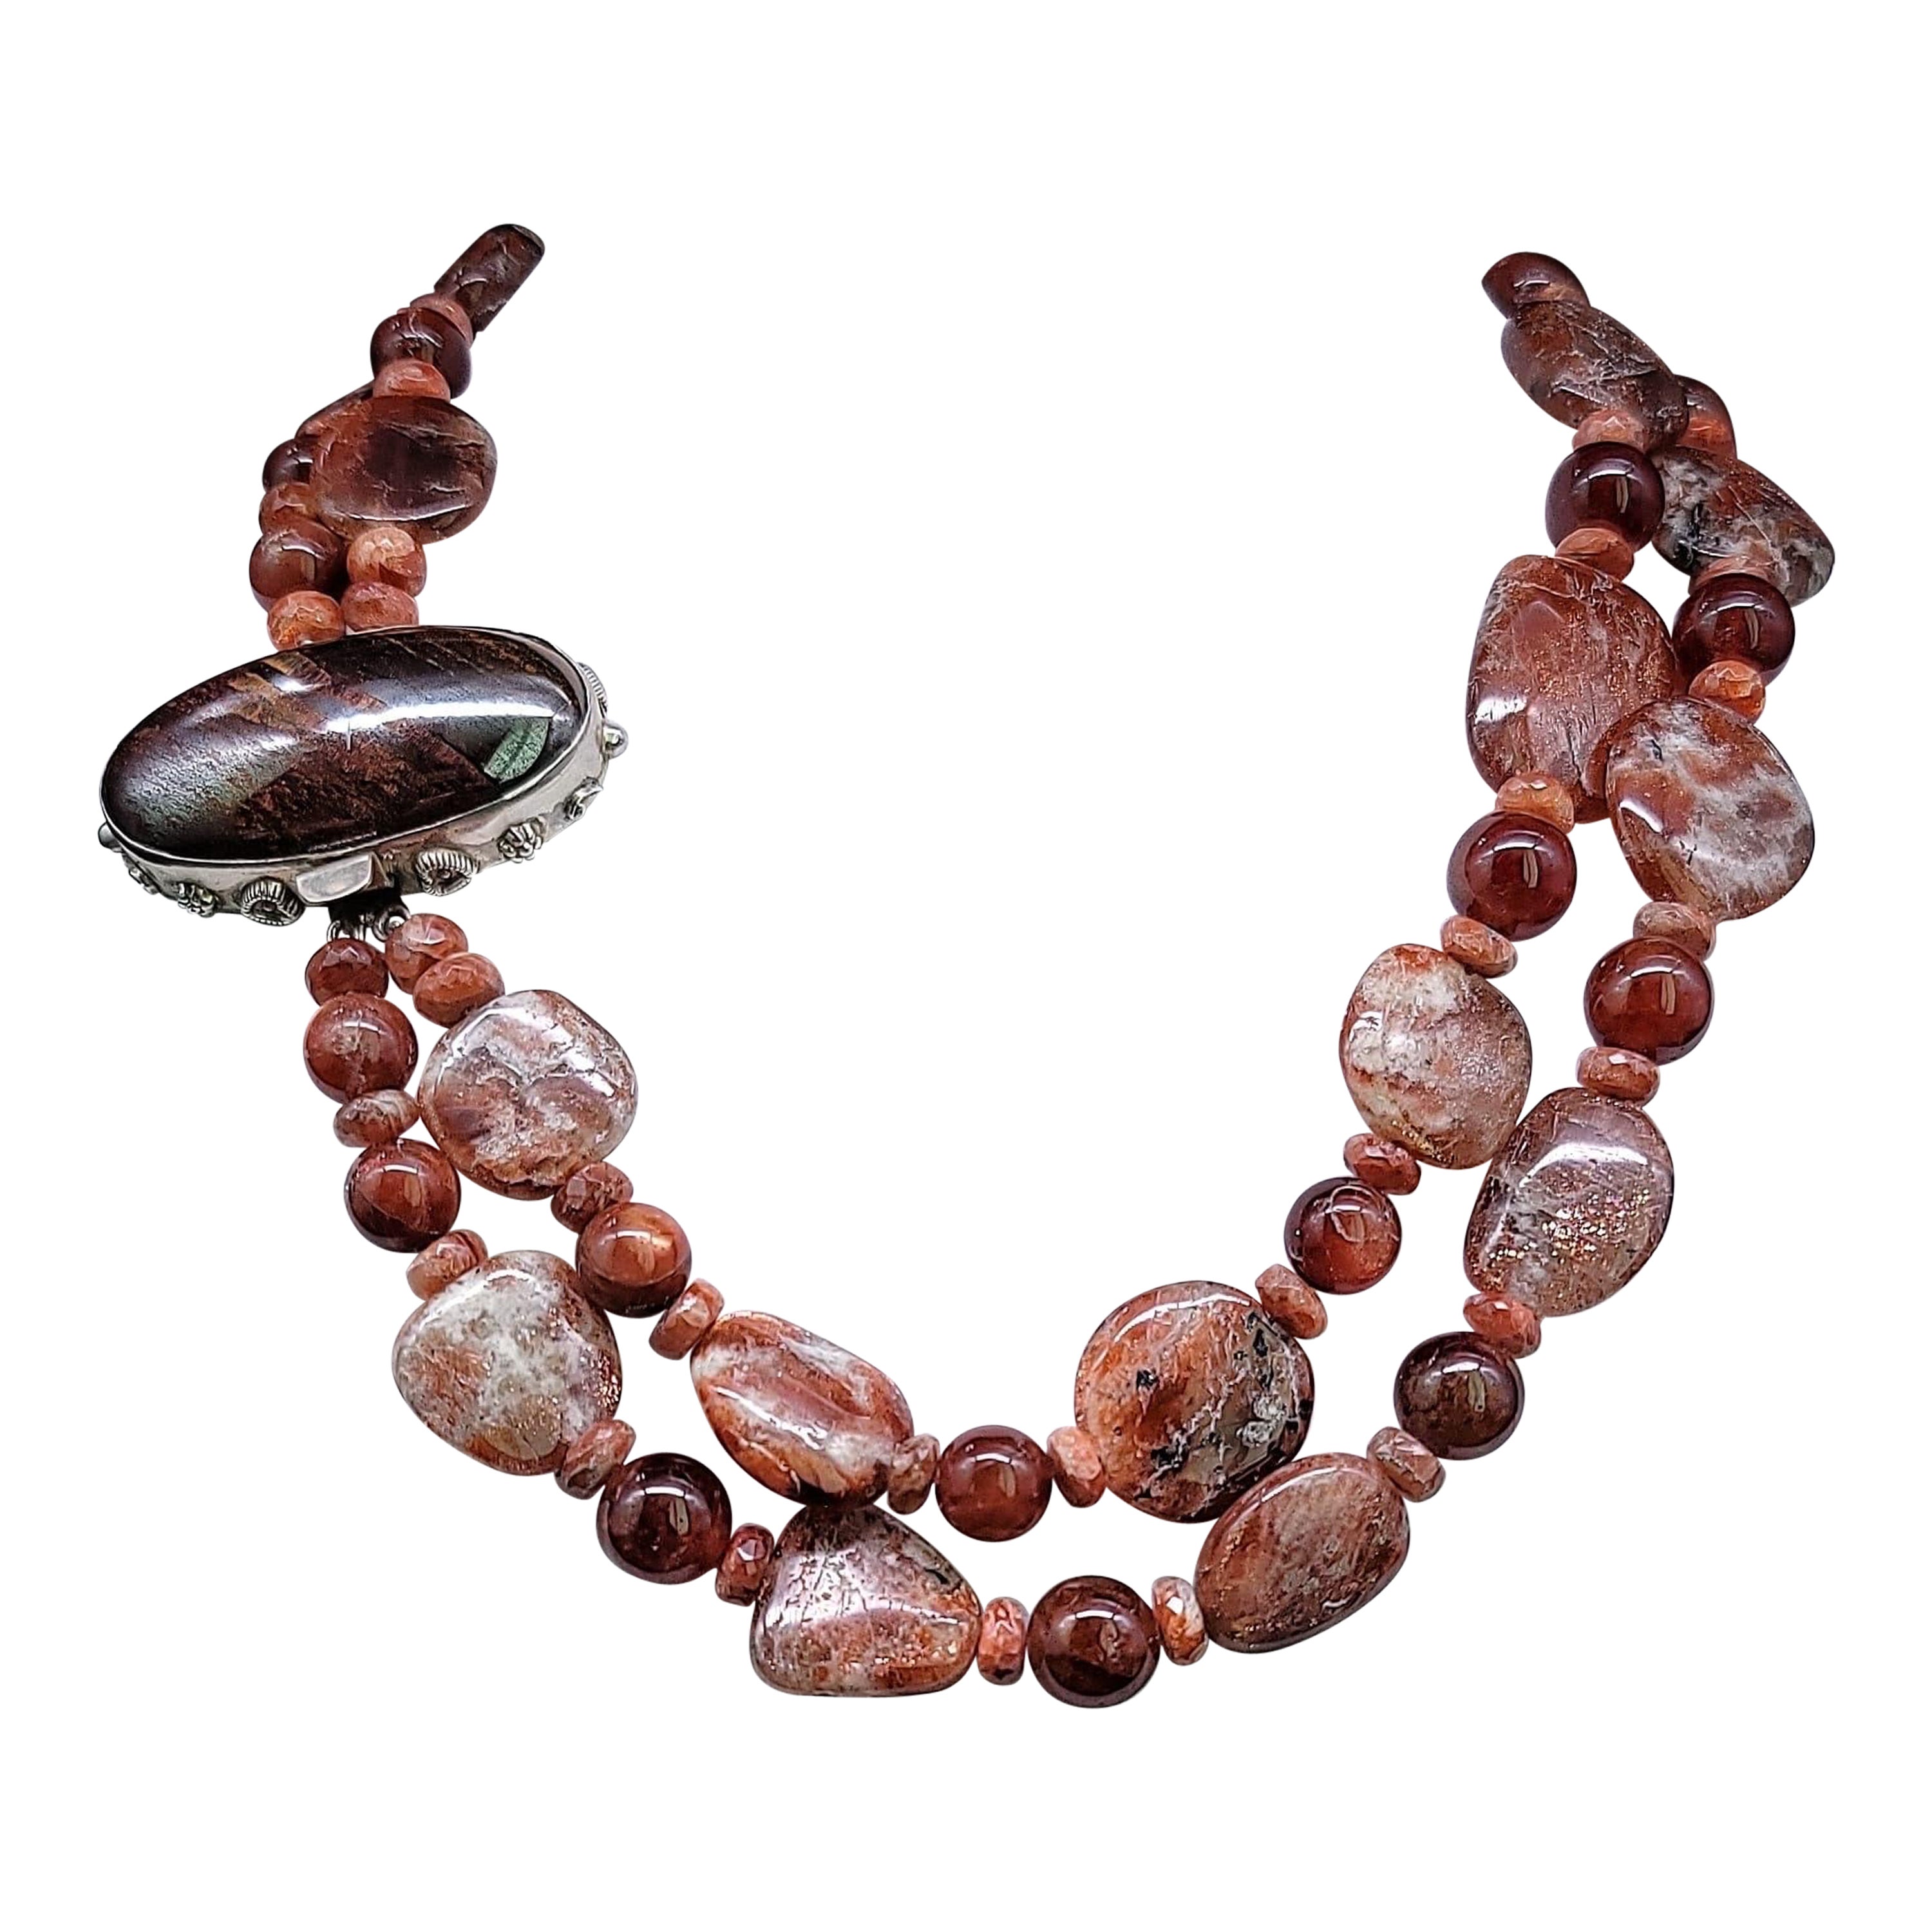 A.Jeschel Radiant Sunstone Specimen necklace. For Sale